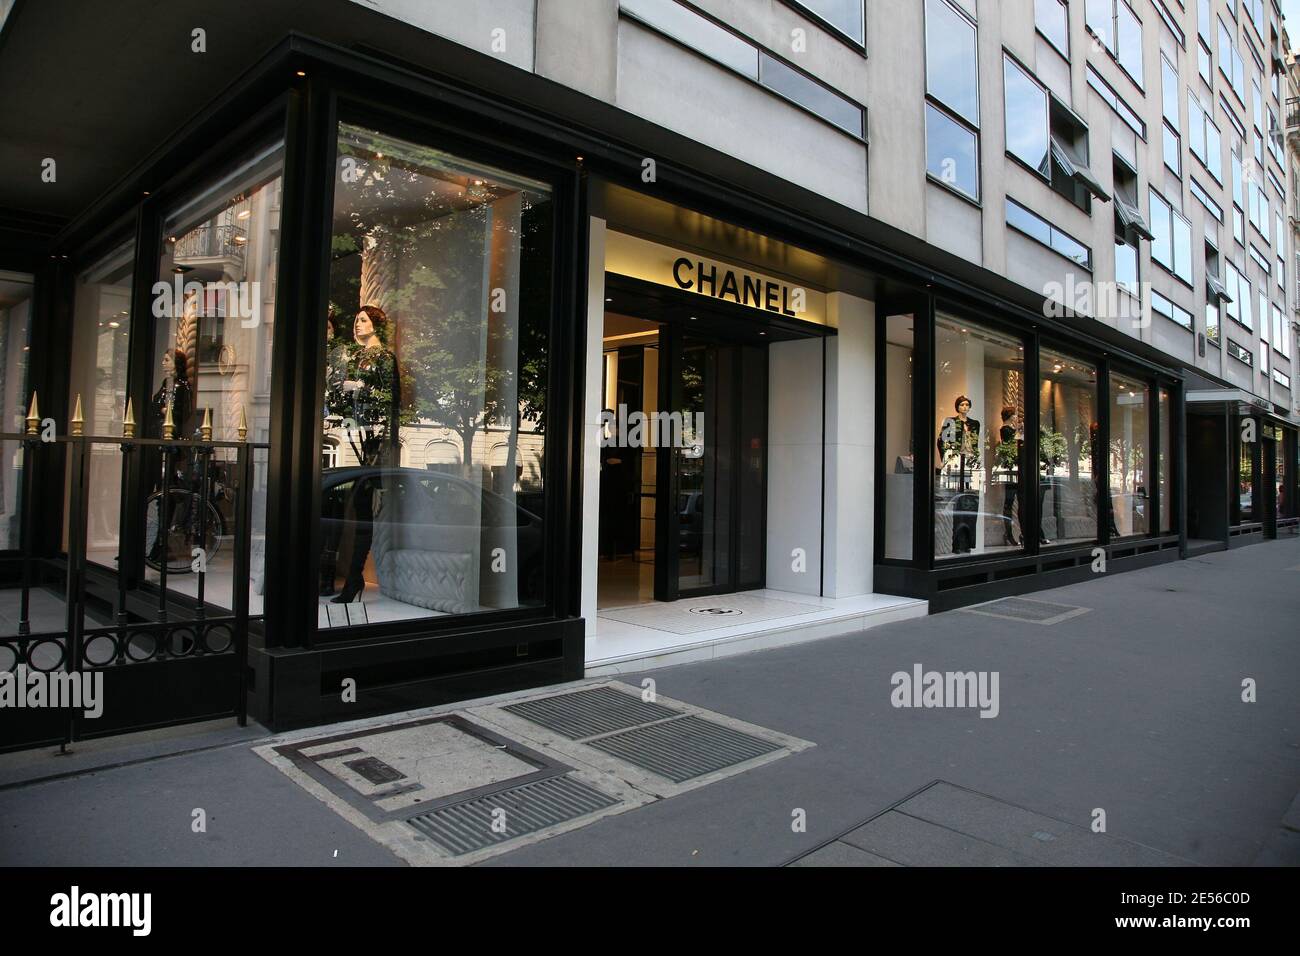 Paris - Avenue Montaigne: Chanel, The House of Chanel, more…